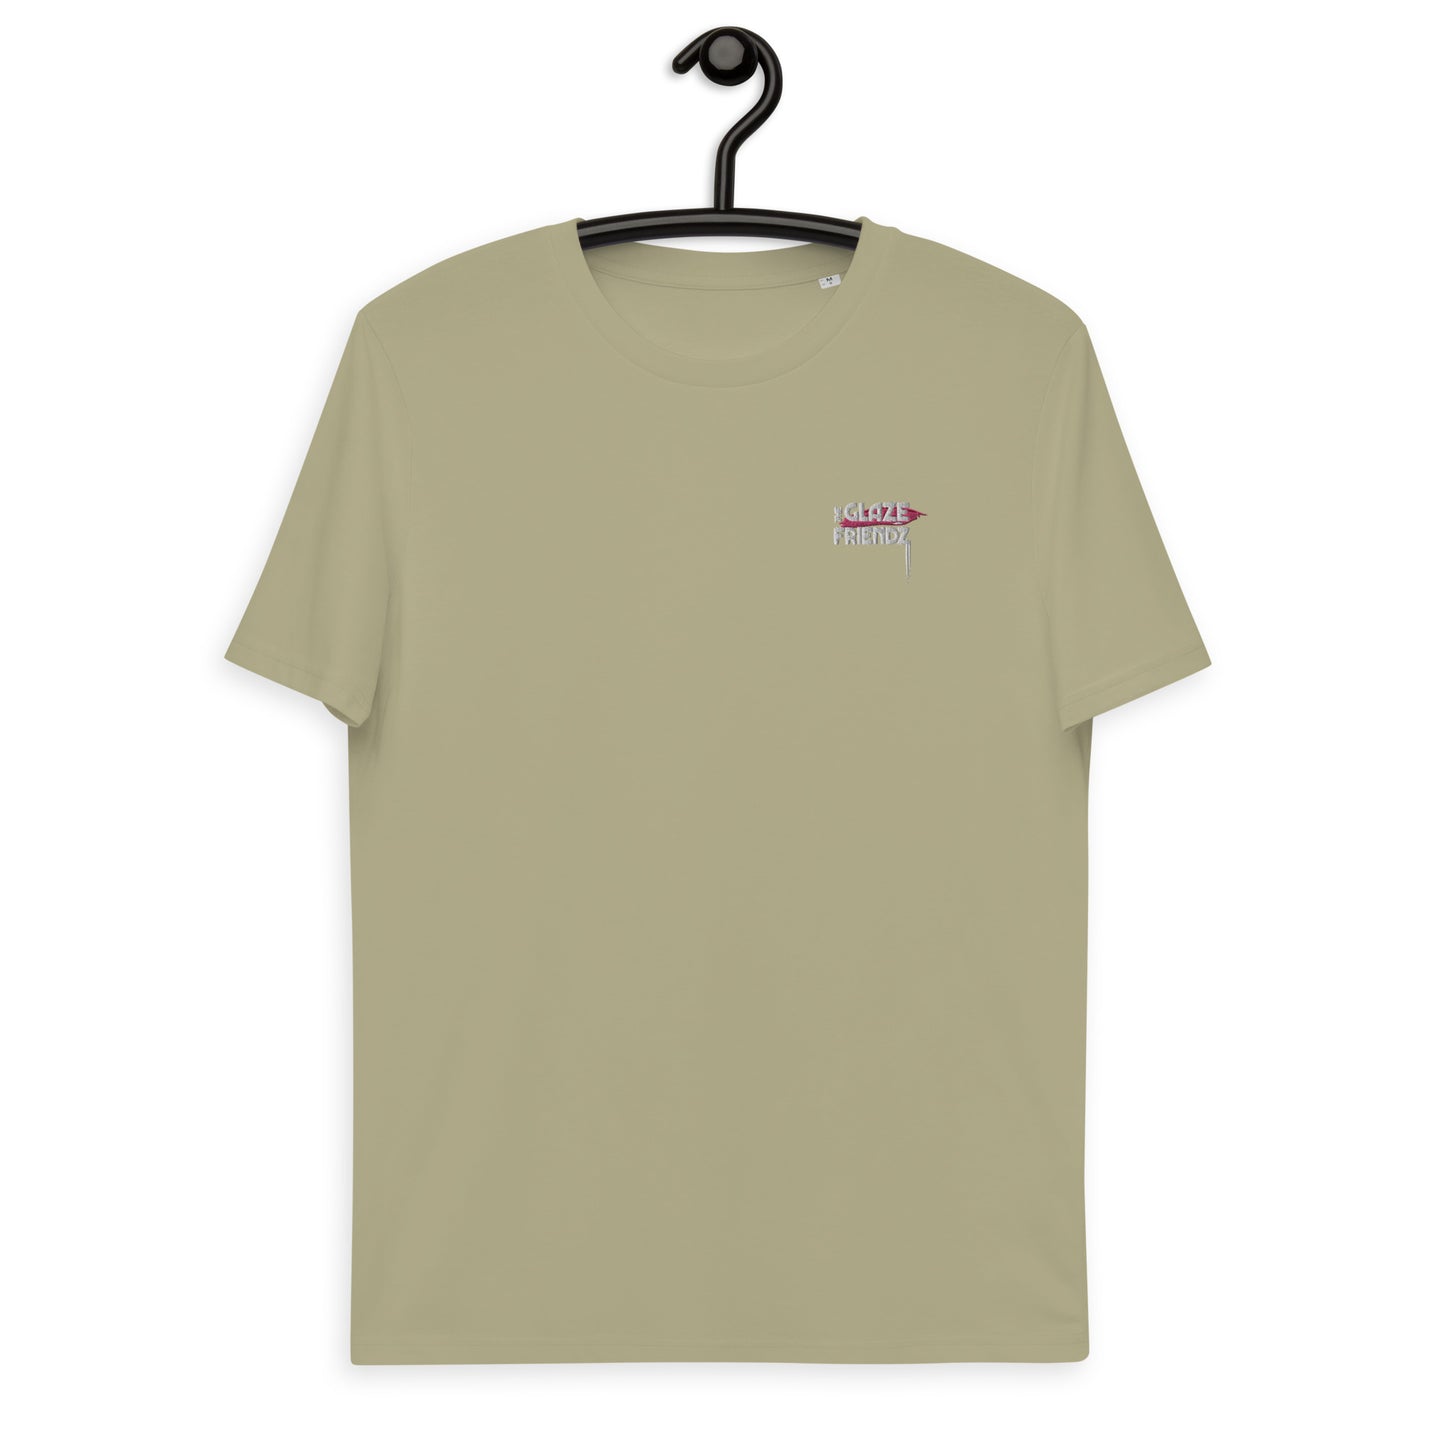 Basic Premium Glaze T-Shirt Colors